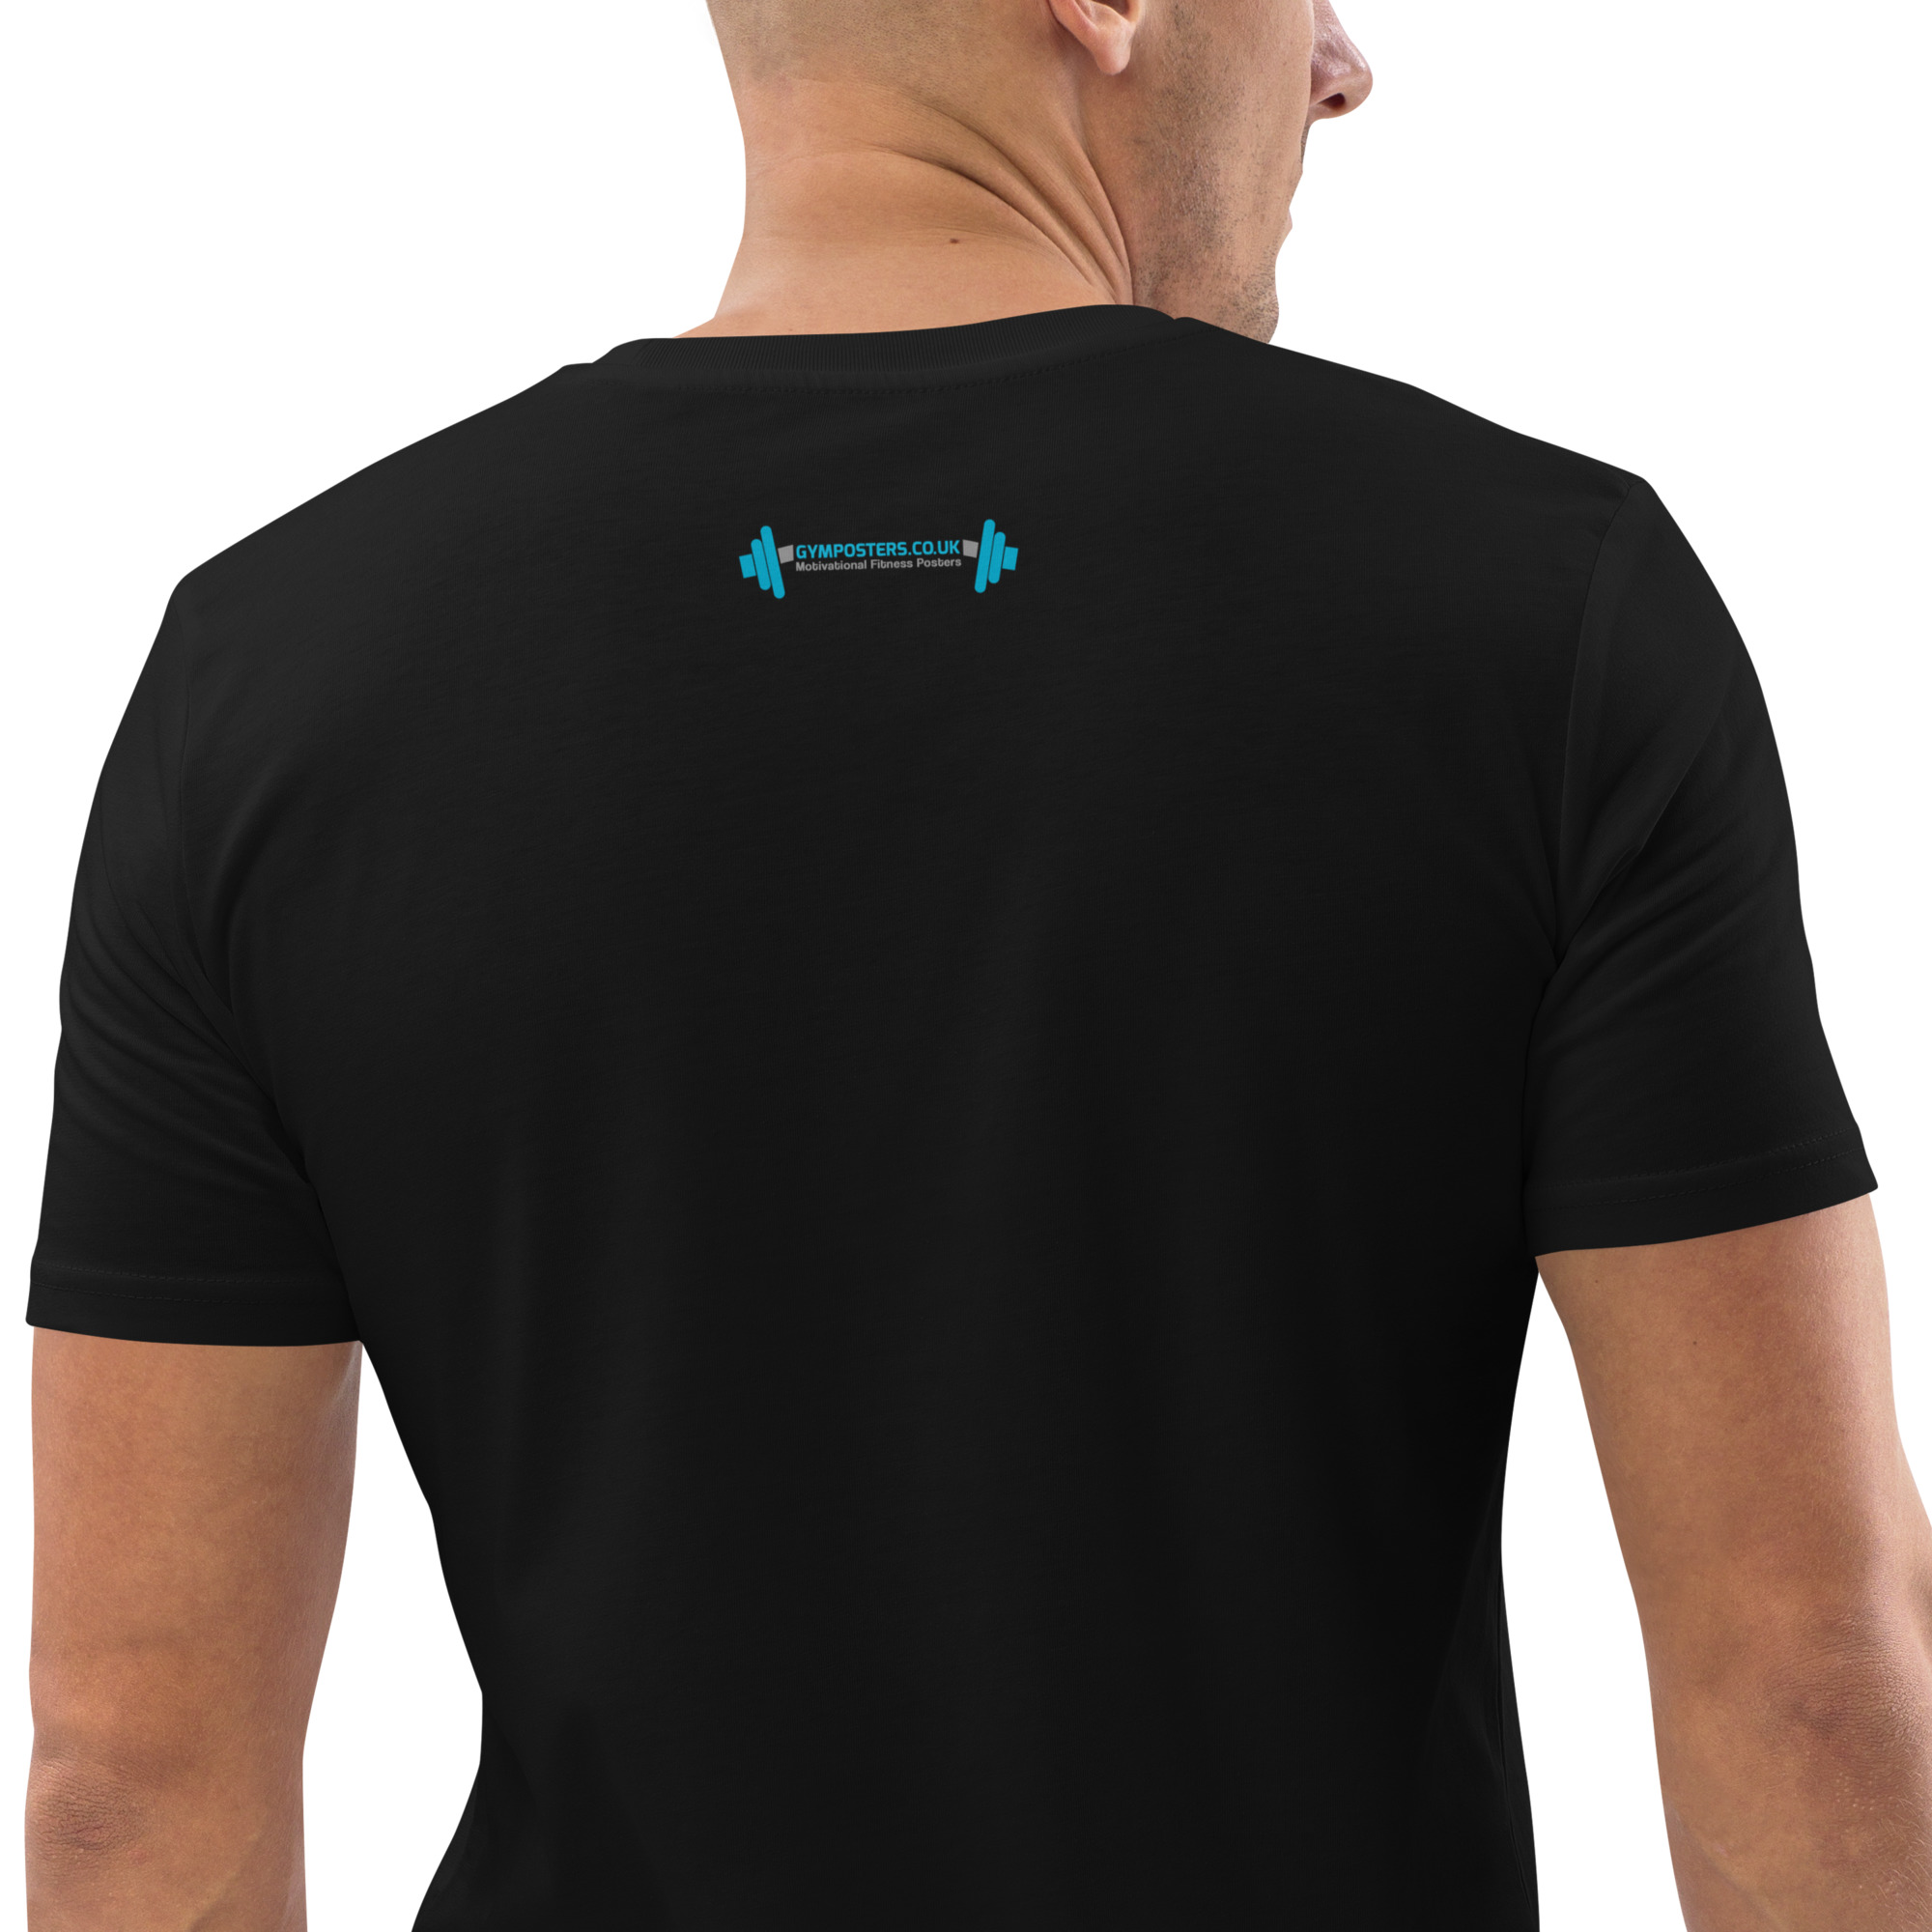 unisex-organic-cotton-t-shirt-black-zoomed-in-65785b878d2f4.jpg